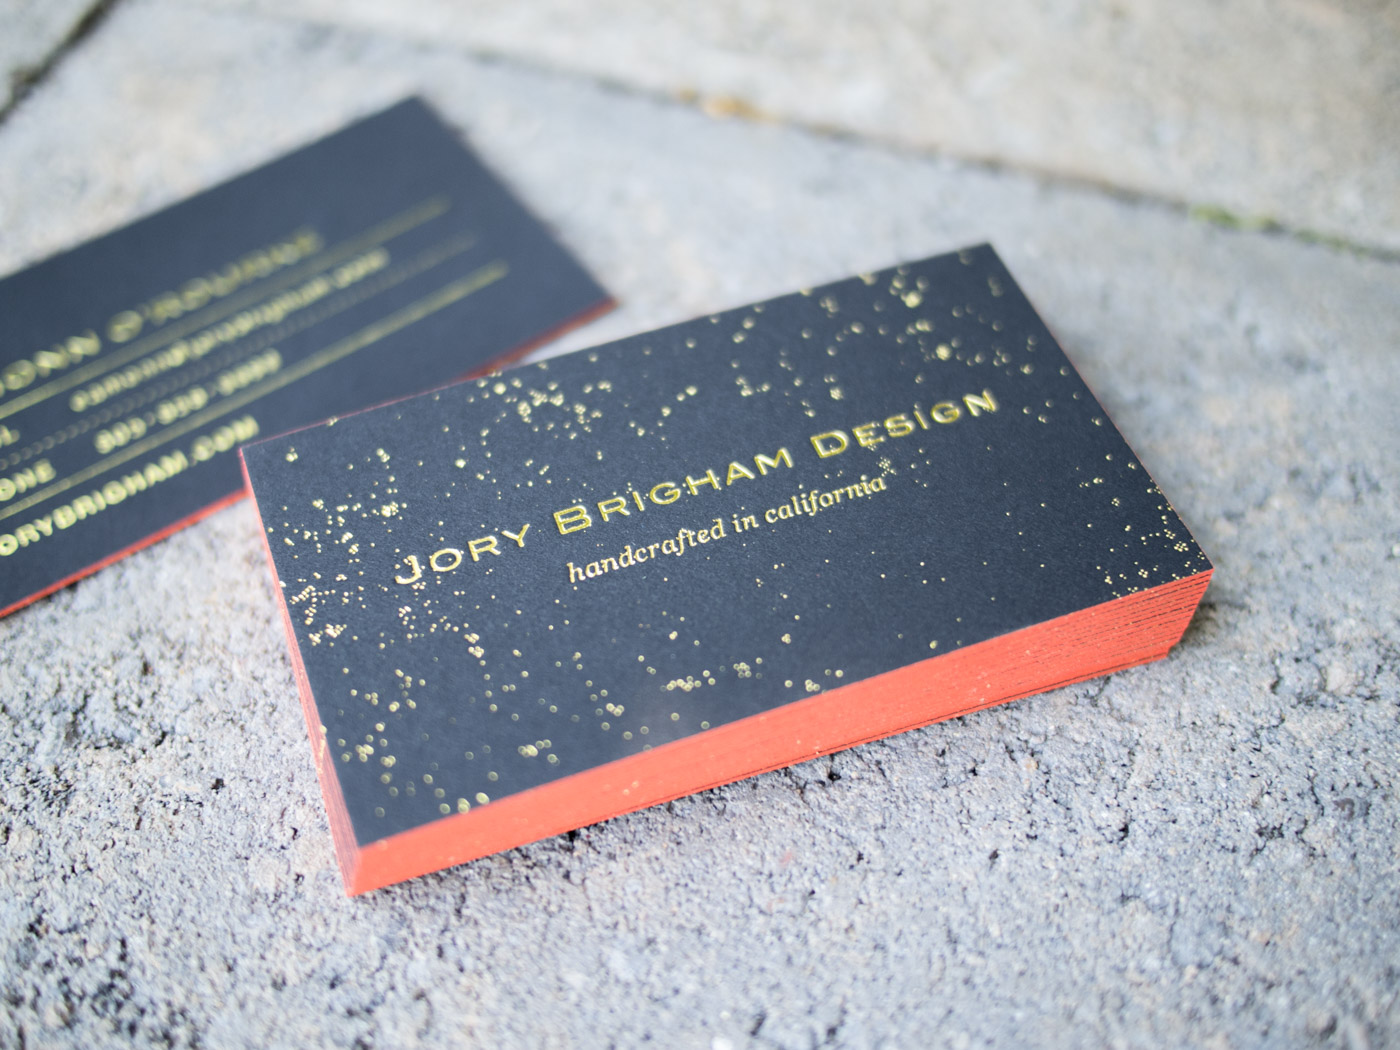 Jory Brigham Design | Printed by Parklife Press